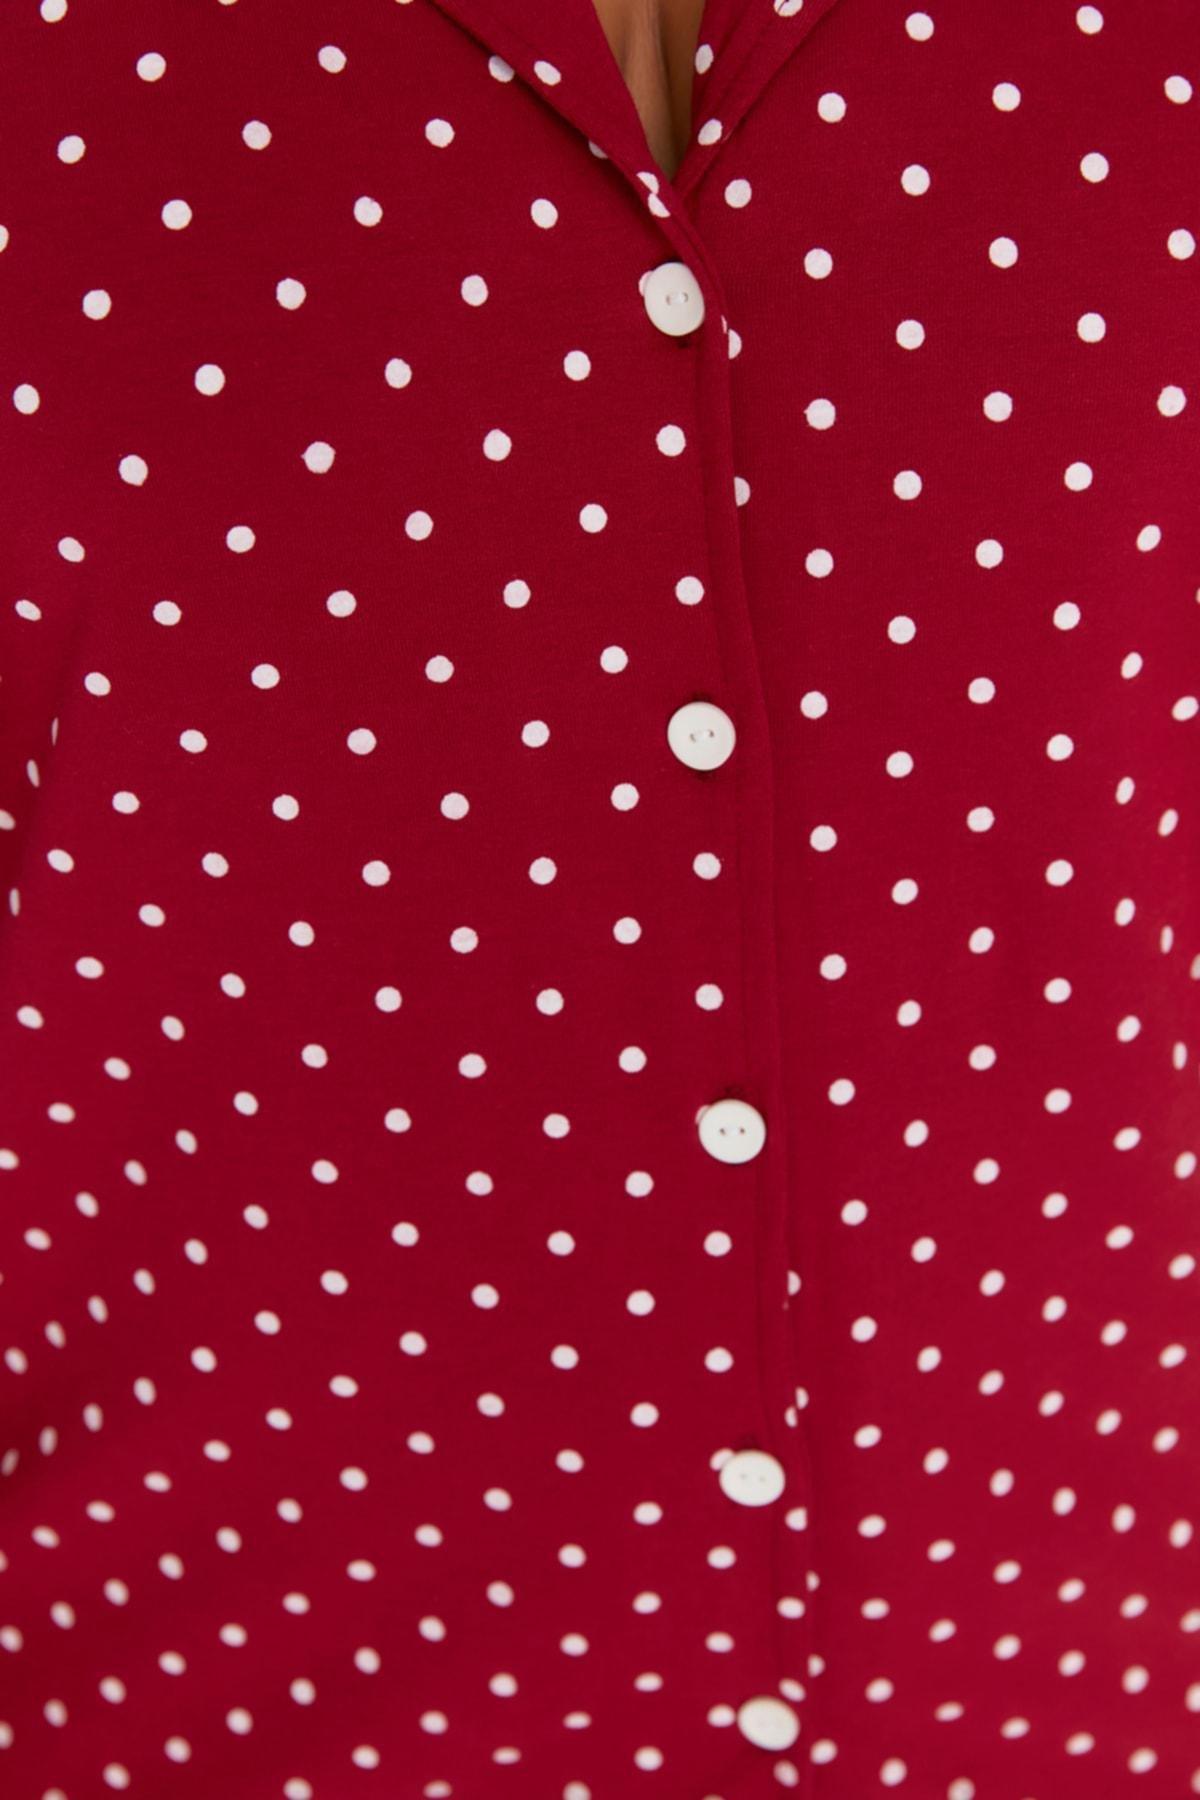 Trendyol - Burgundy Printed Plus Size Pajama Set